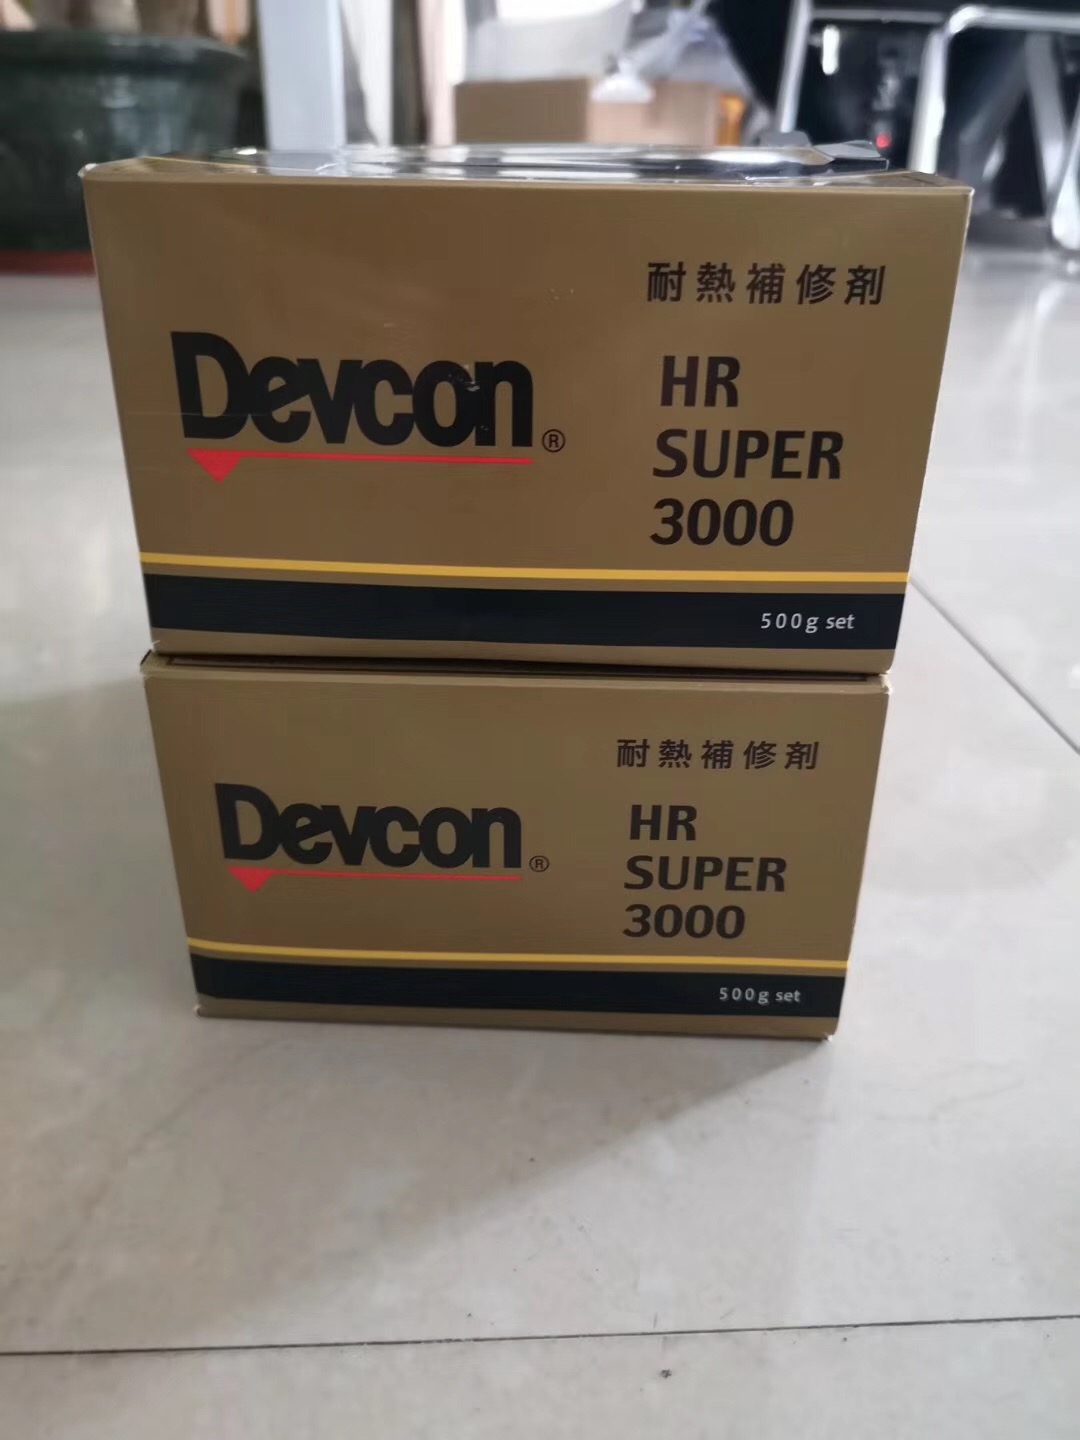 HR Super 3000